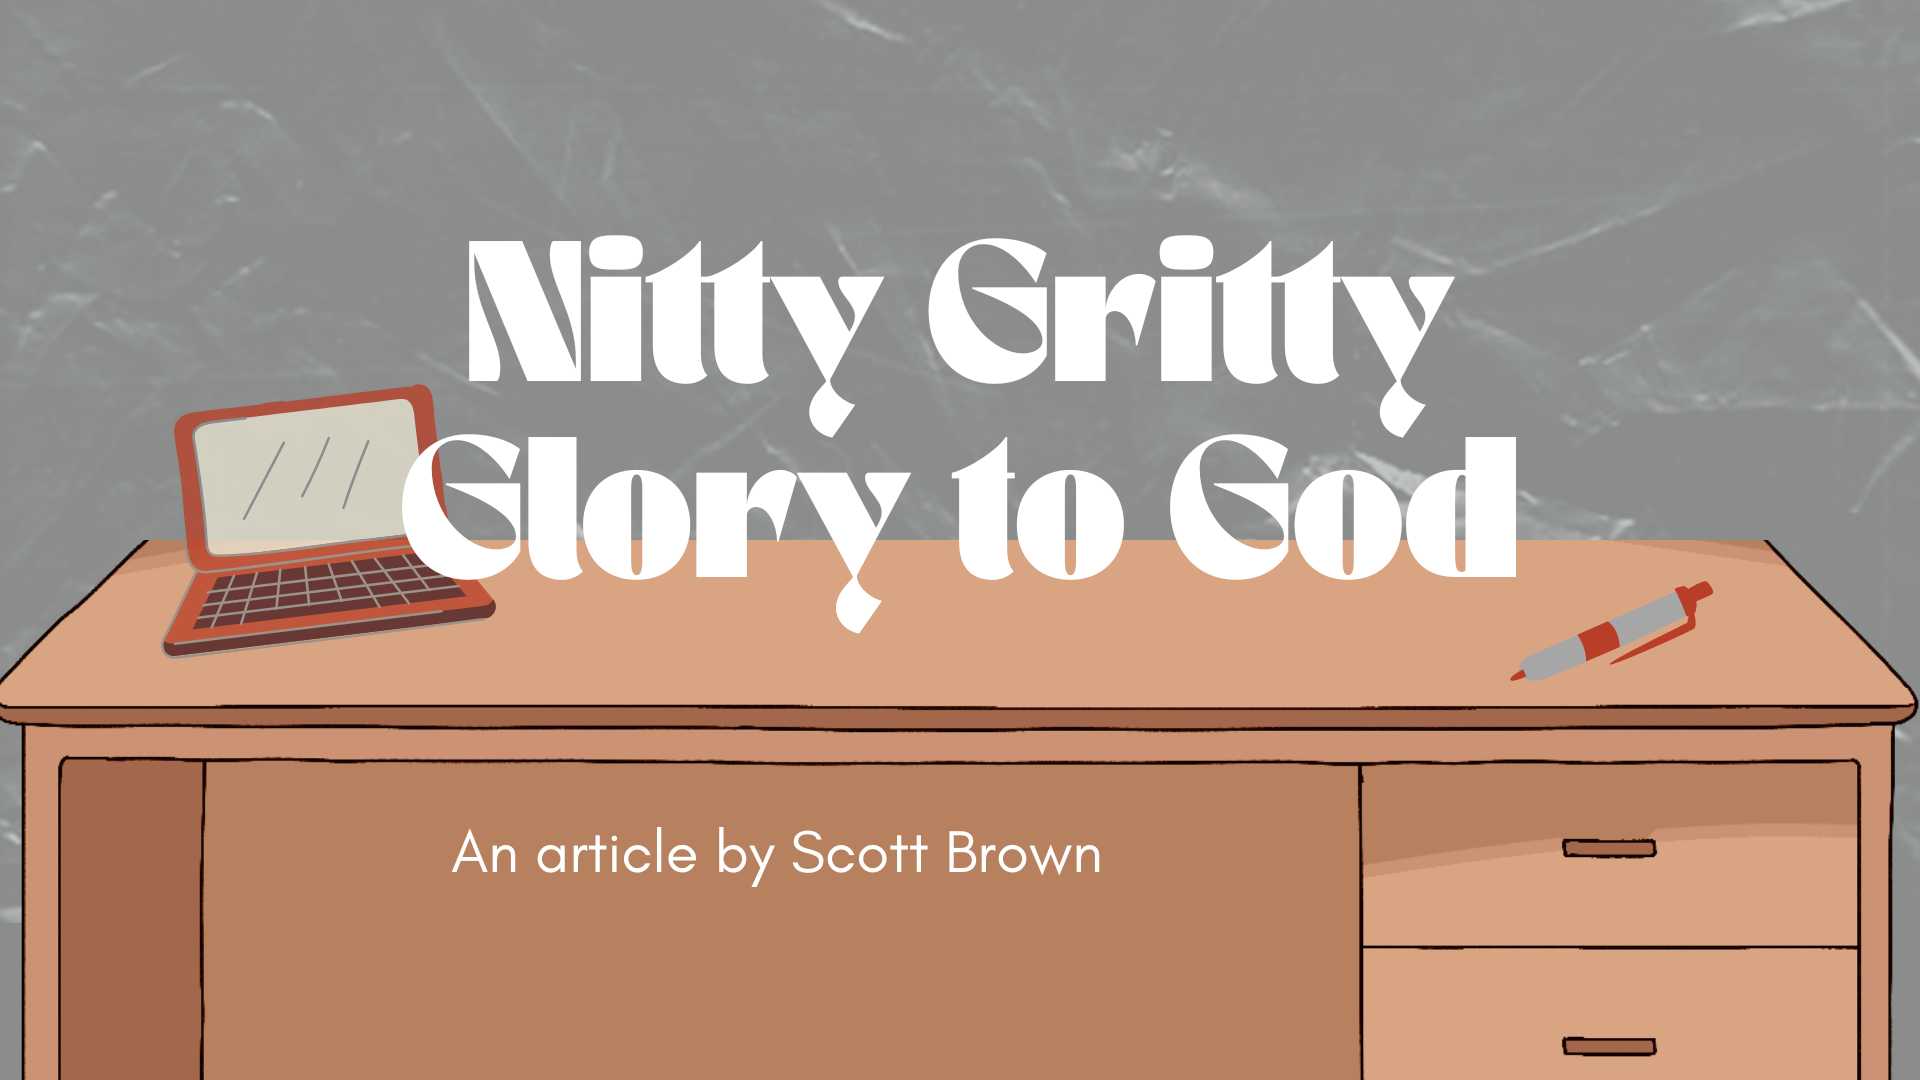 Nitty Gritty Glory to God